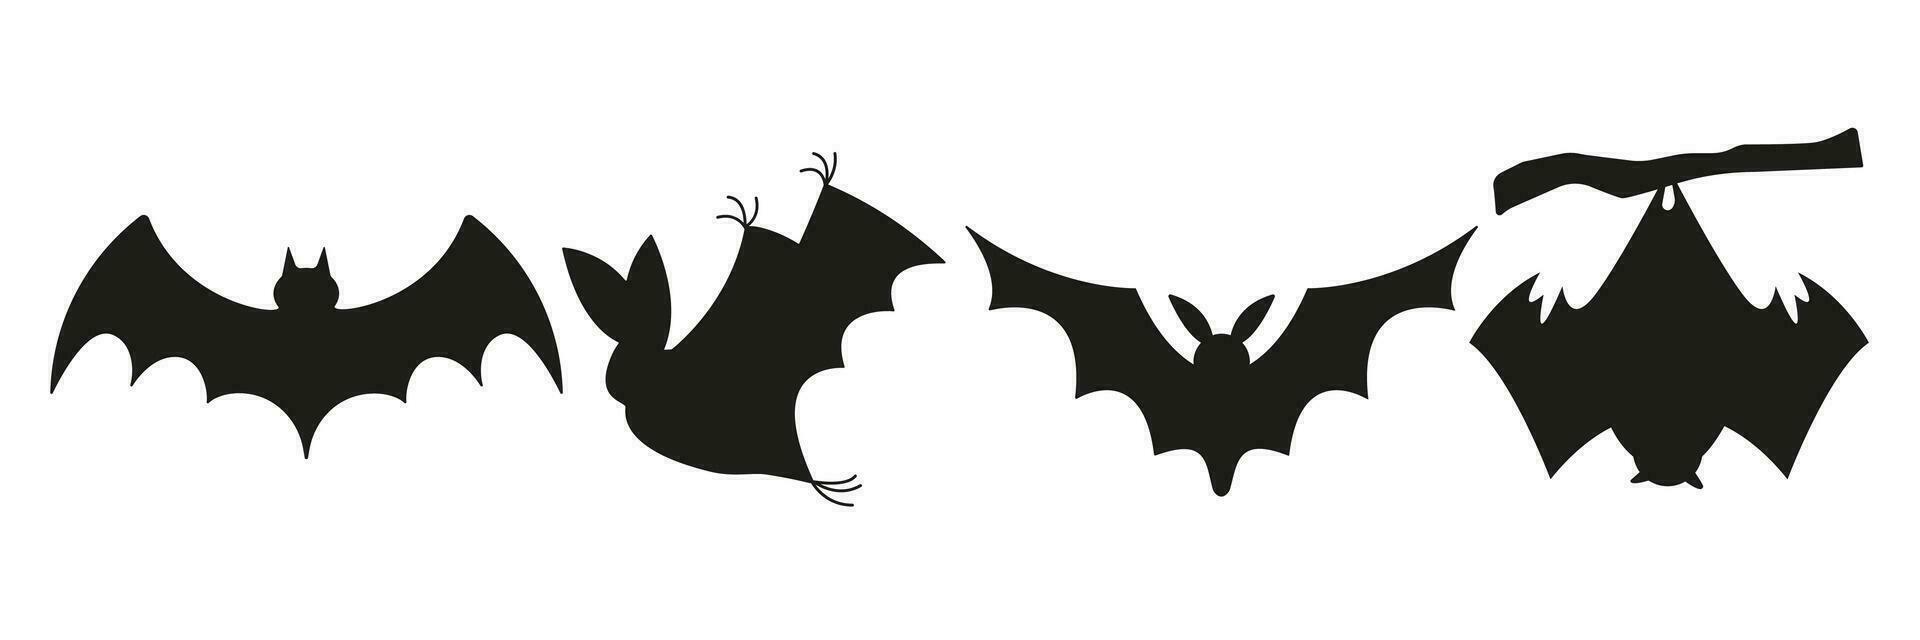 süß Vektor Halloween Schläger im 4 anders Sorten Illustration oder Symbol.